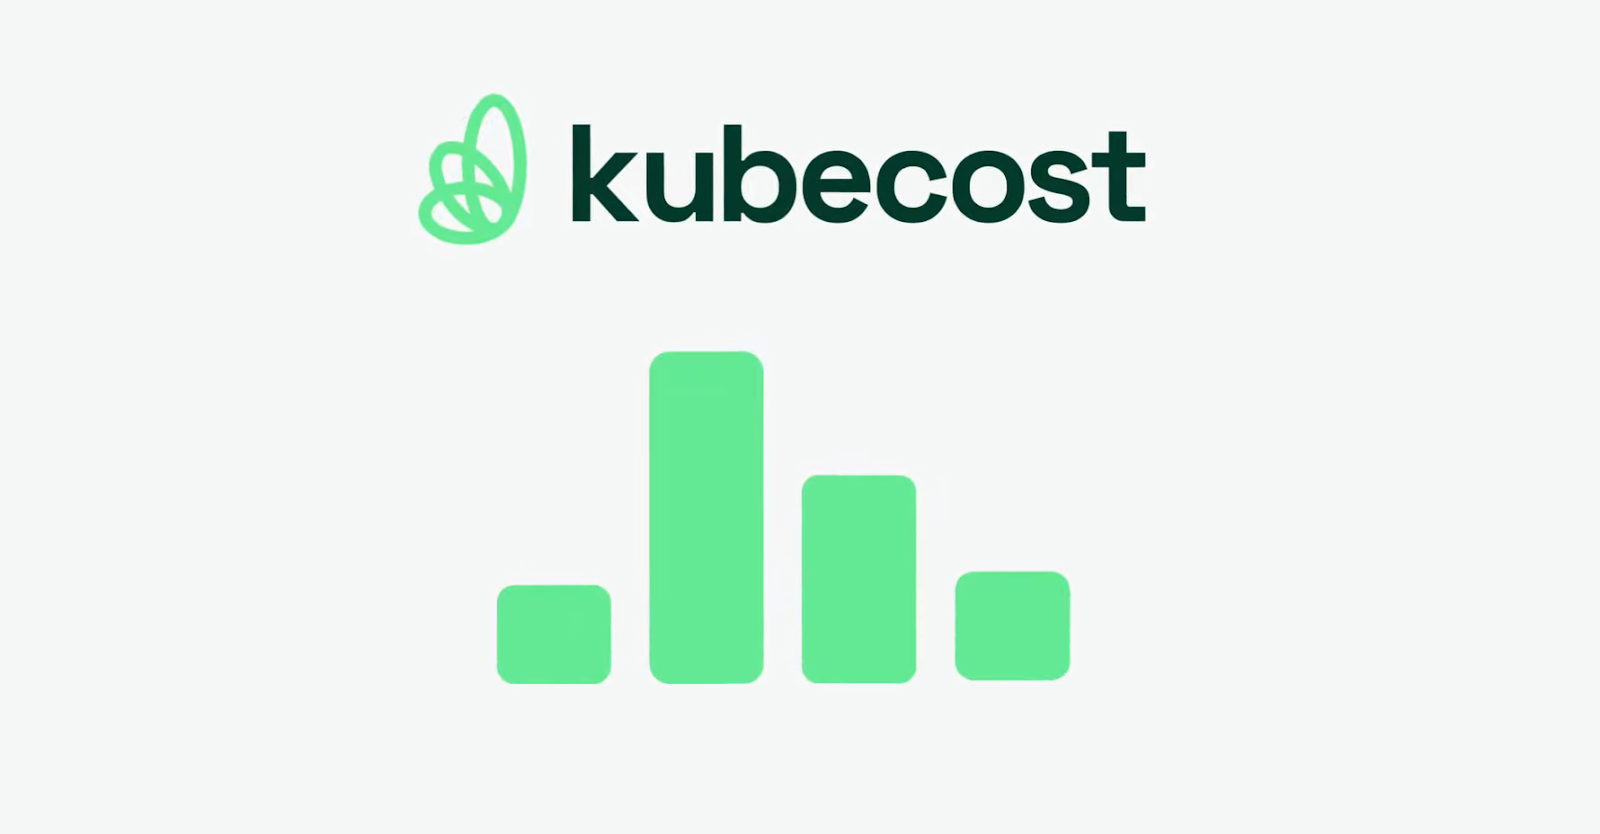 kubecost and logo near it, four green columns below